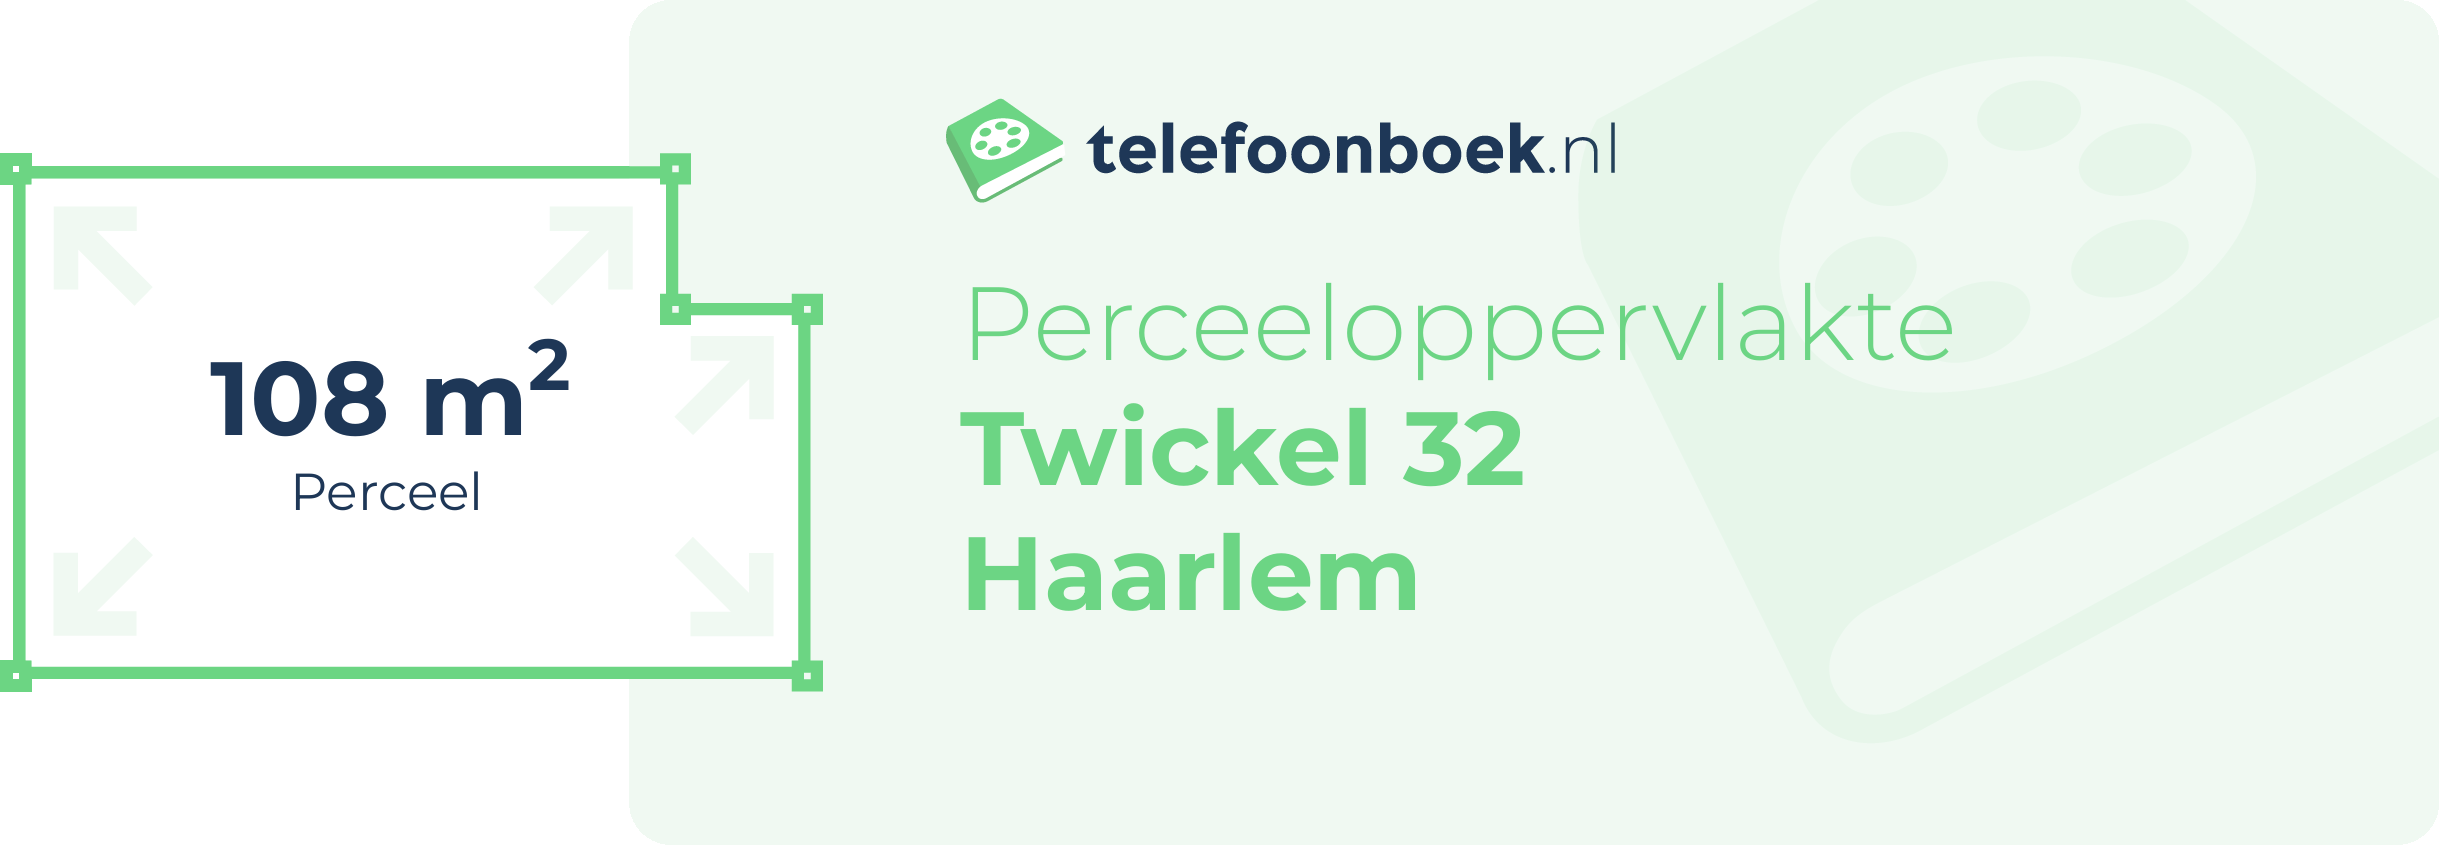 Perceeloppervlakte Twickel 32 Haarlem